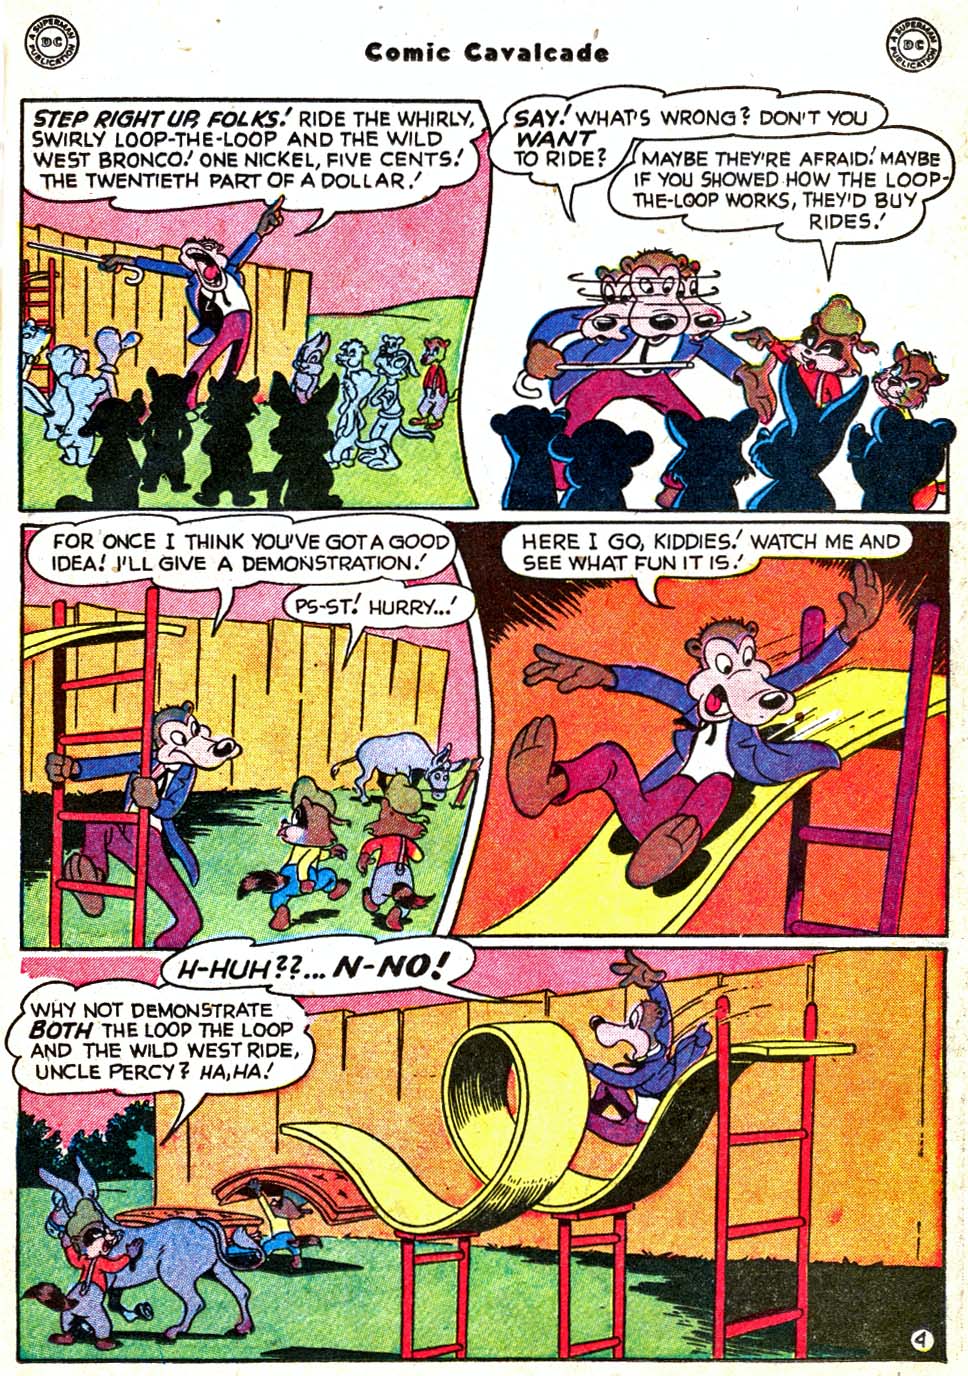 Comic Cavalcade issue 31 - Page 21